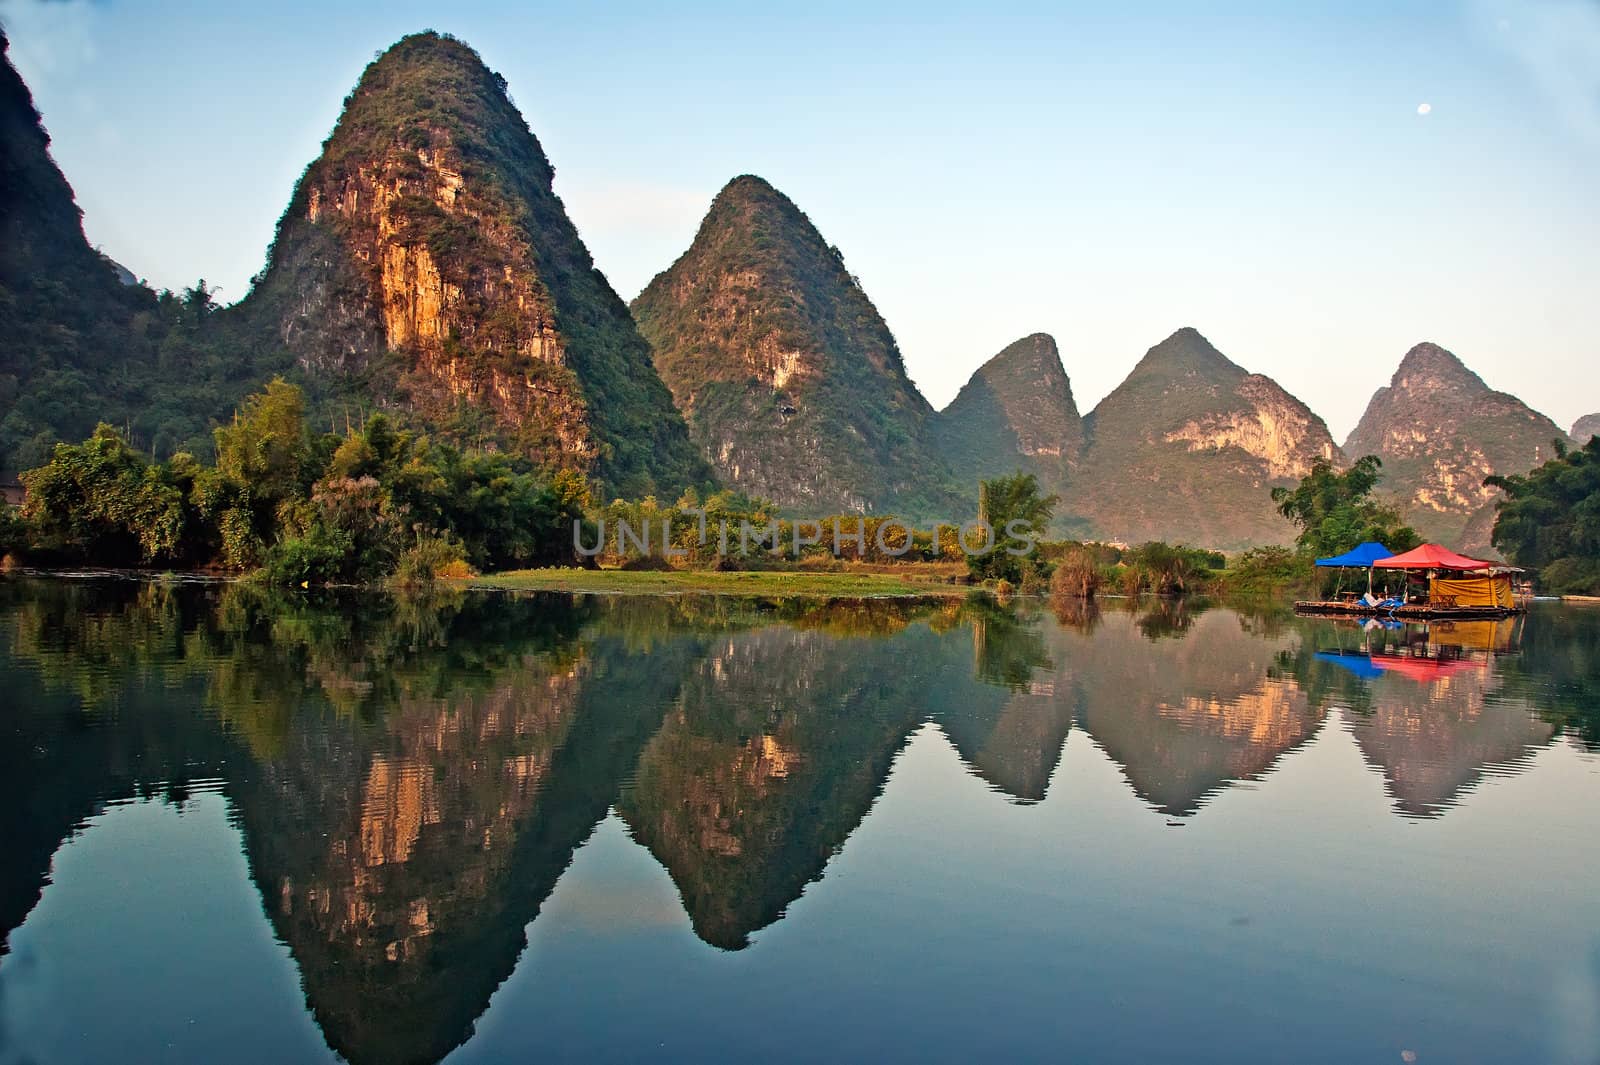 Beautiful mountains and their reflection in the water - was taken in Yangshuo, Guilin, Guangxi, China